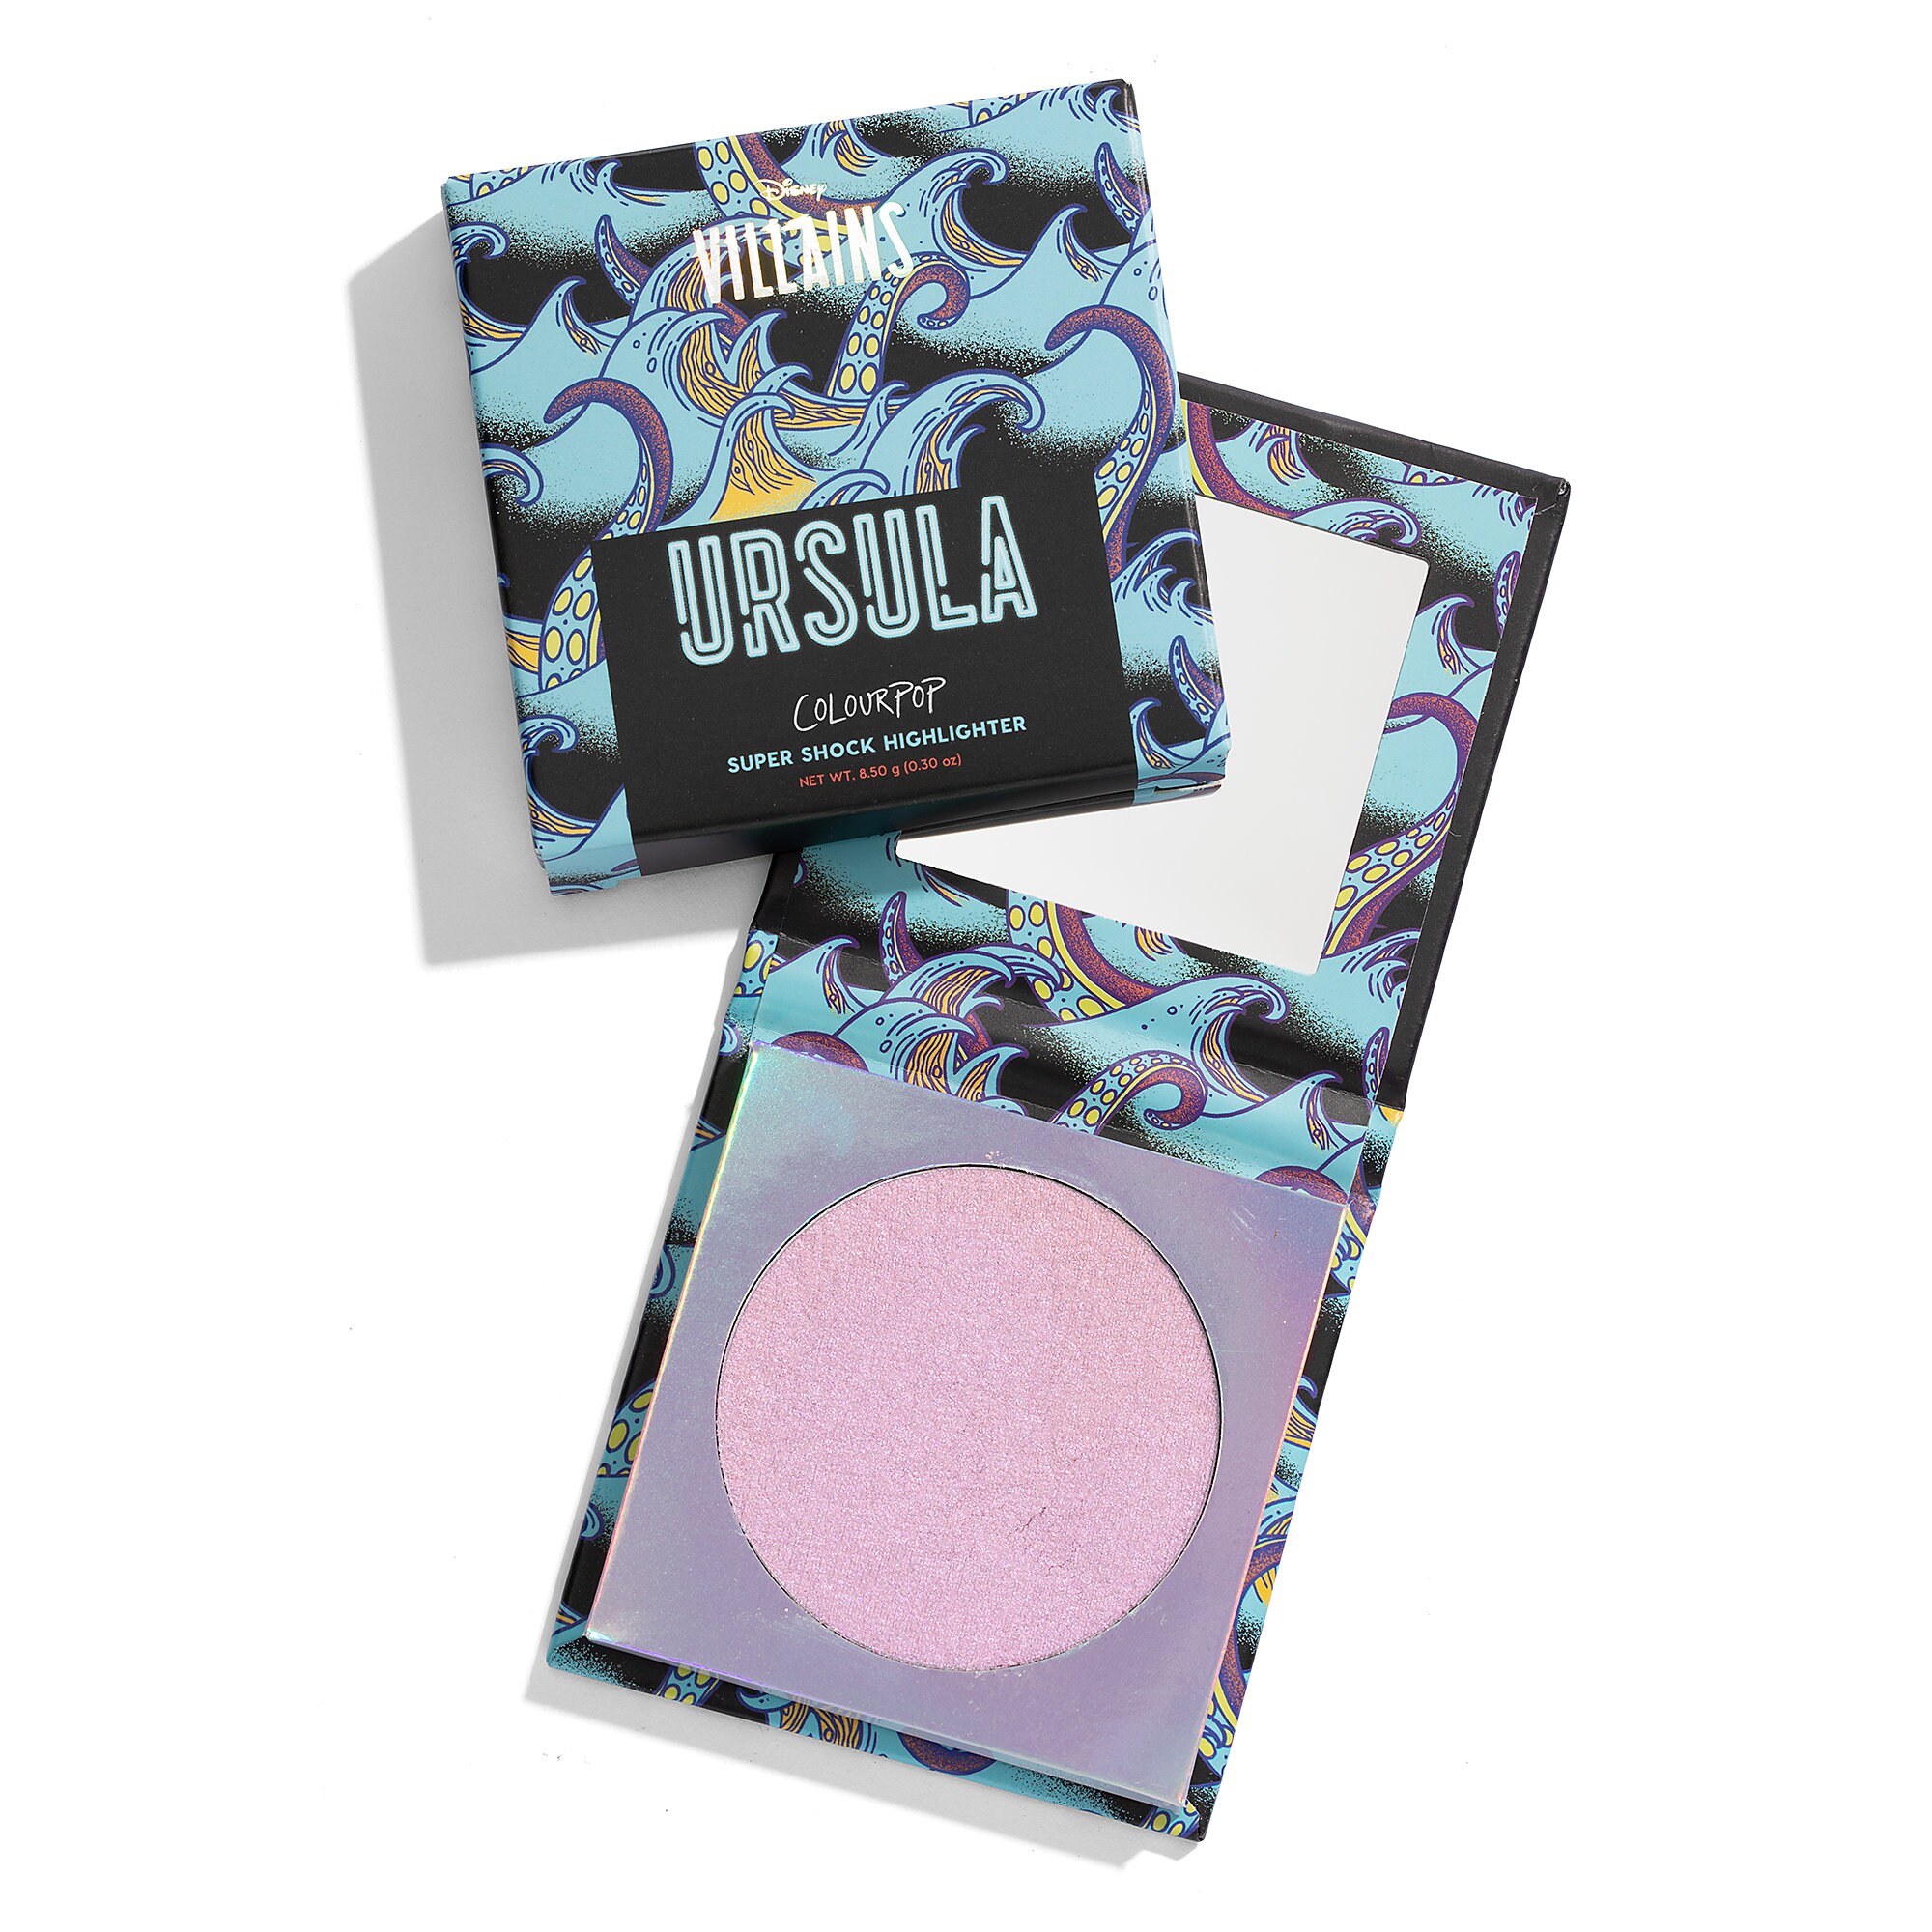 Ursula Collection Set by ColourPop